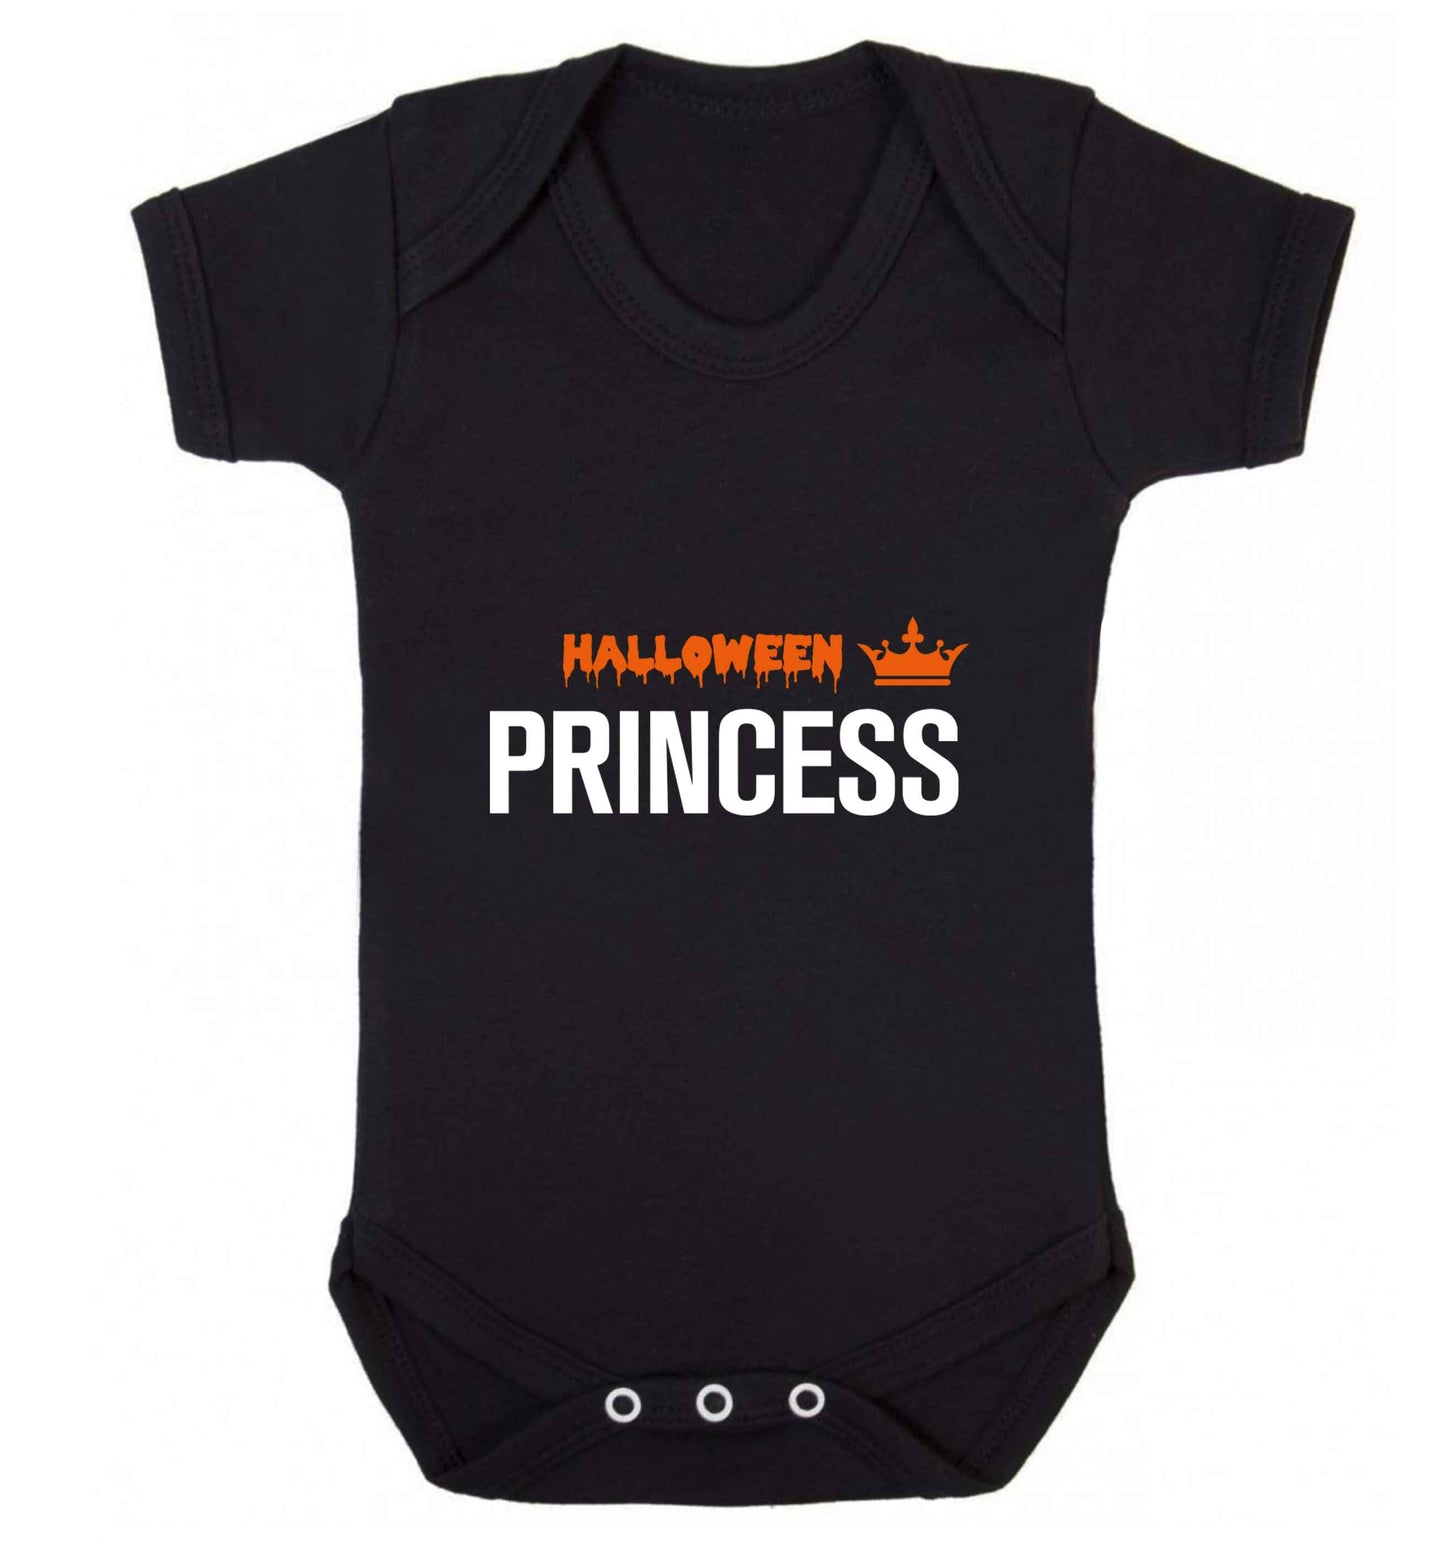 Halloween princess baby vest black 18-24 months